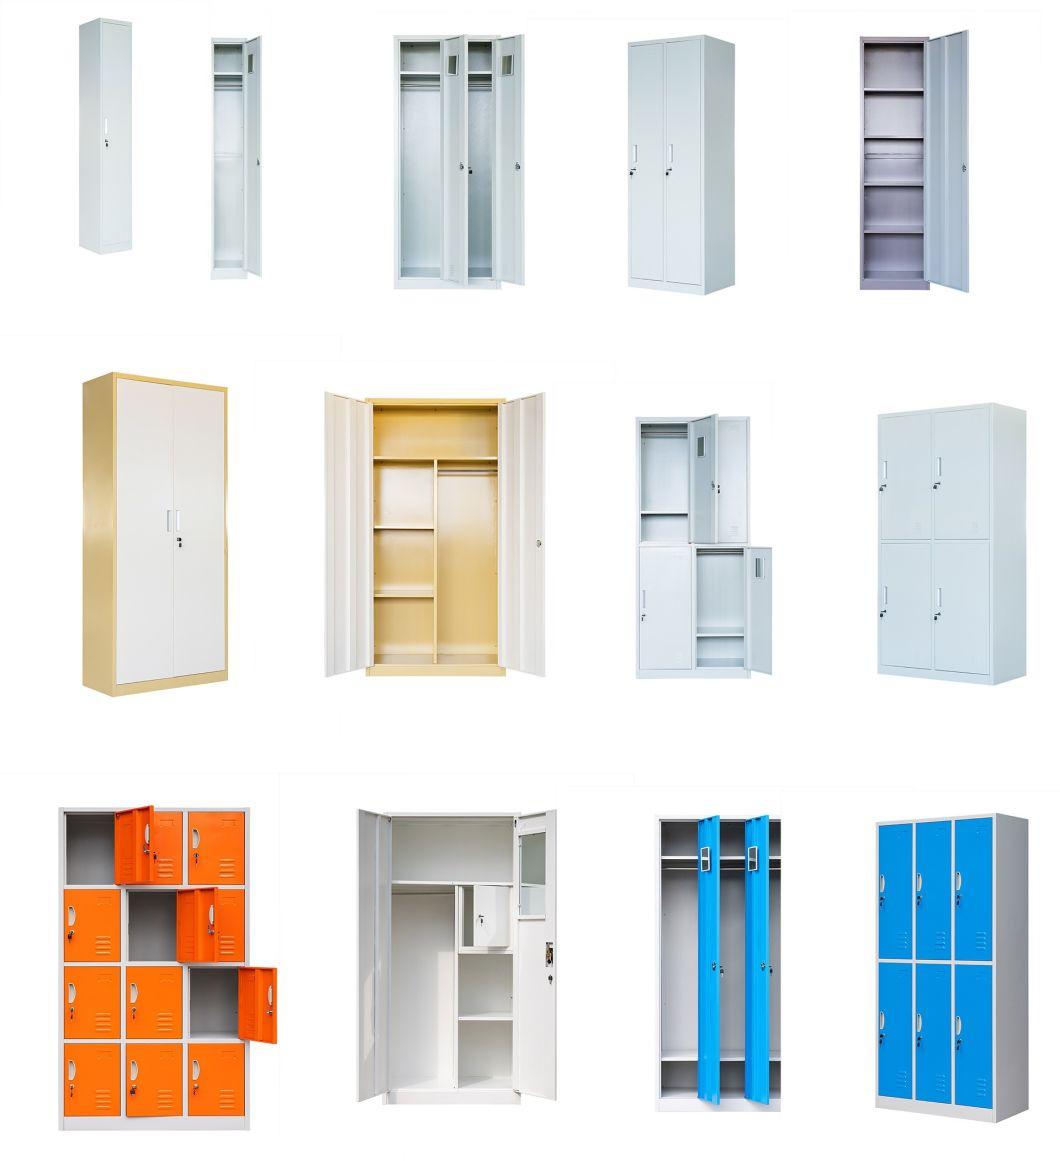 Colorful 3 Door Key-Lock Mobile Steel Storage Locker Wardrobes for Small Rooms/Swimming Pool